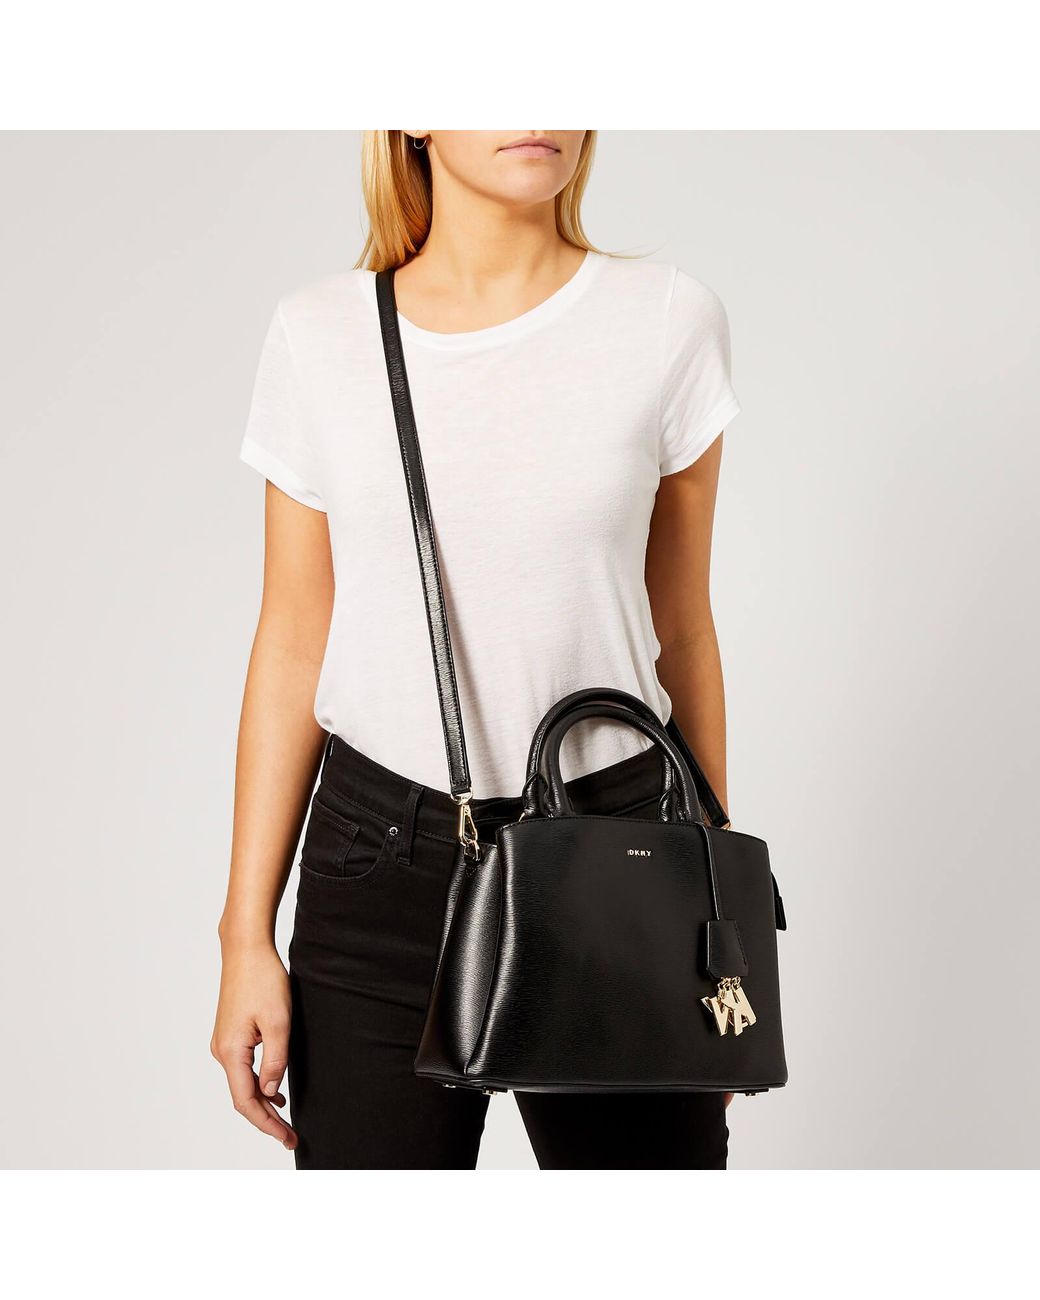 Black 'Paige' leather shoulder bag See By Chloé - Vitkac GB